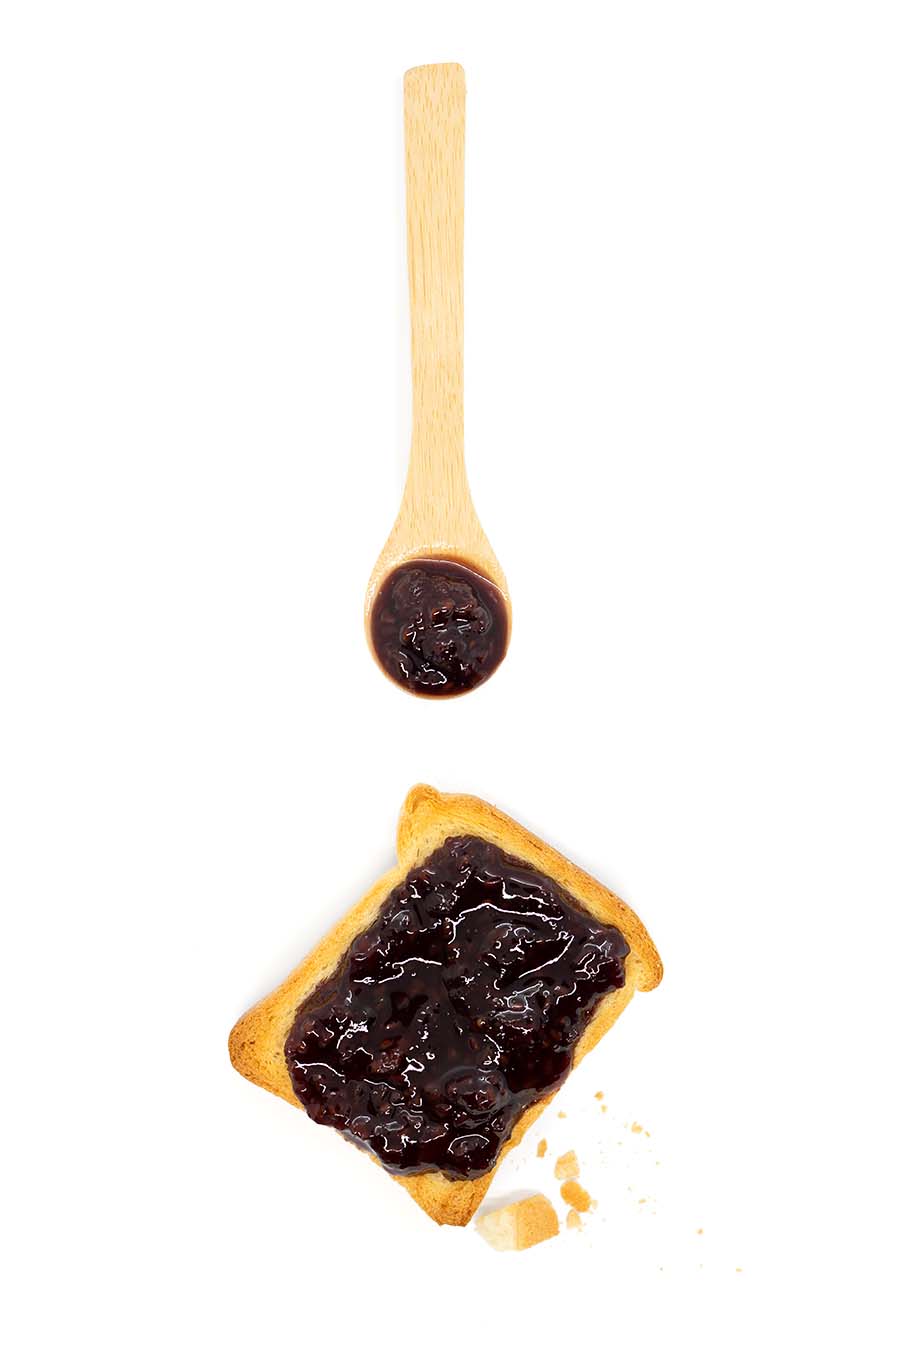 Artisanal Wild Raspberry Jam spoon toast Health from Europe